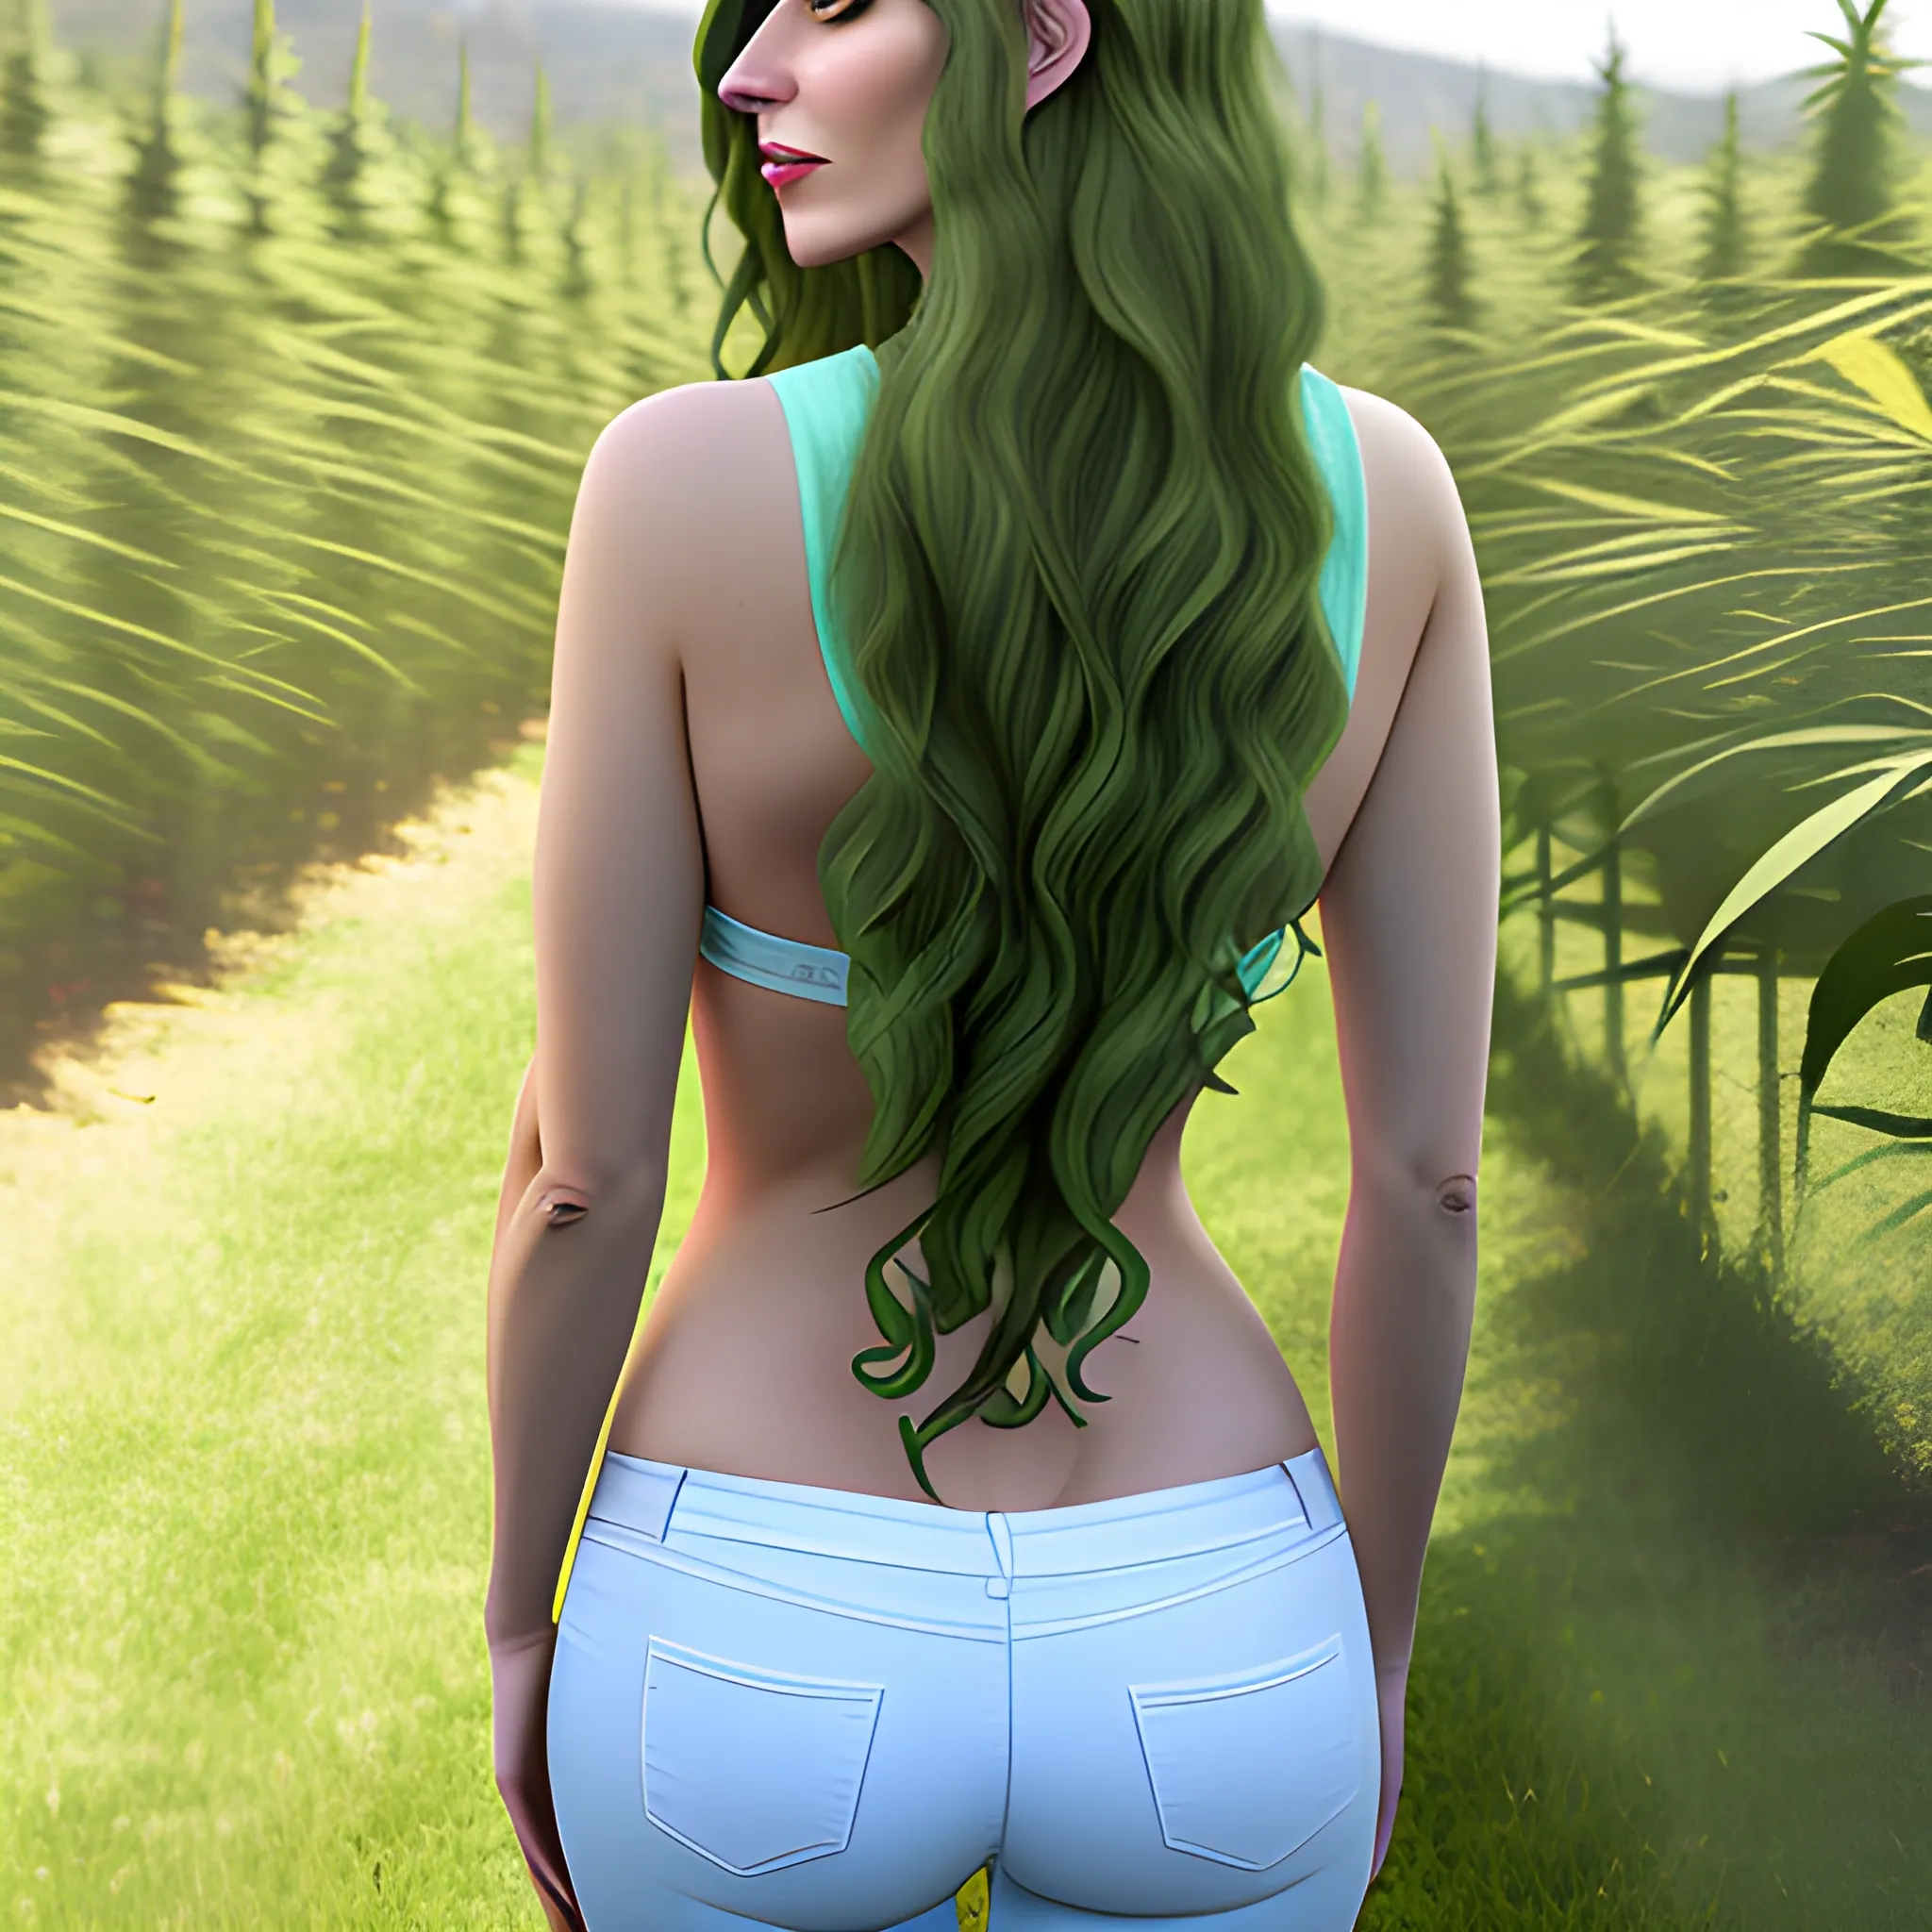 girl, realistic photo, cannabis, high, smoking, nice day, detailed, booty, long hair
